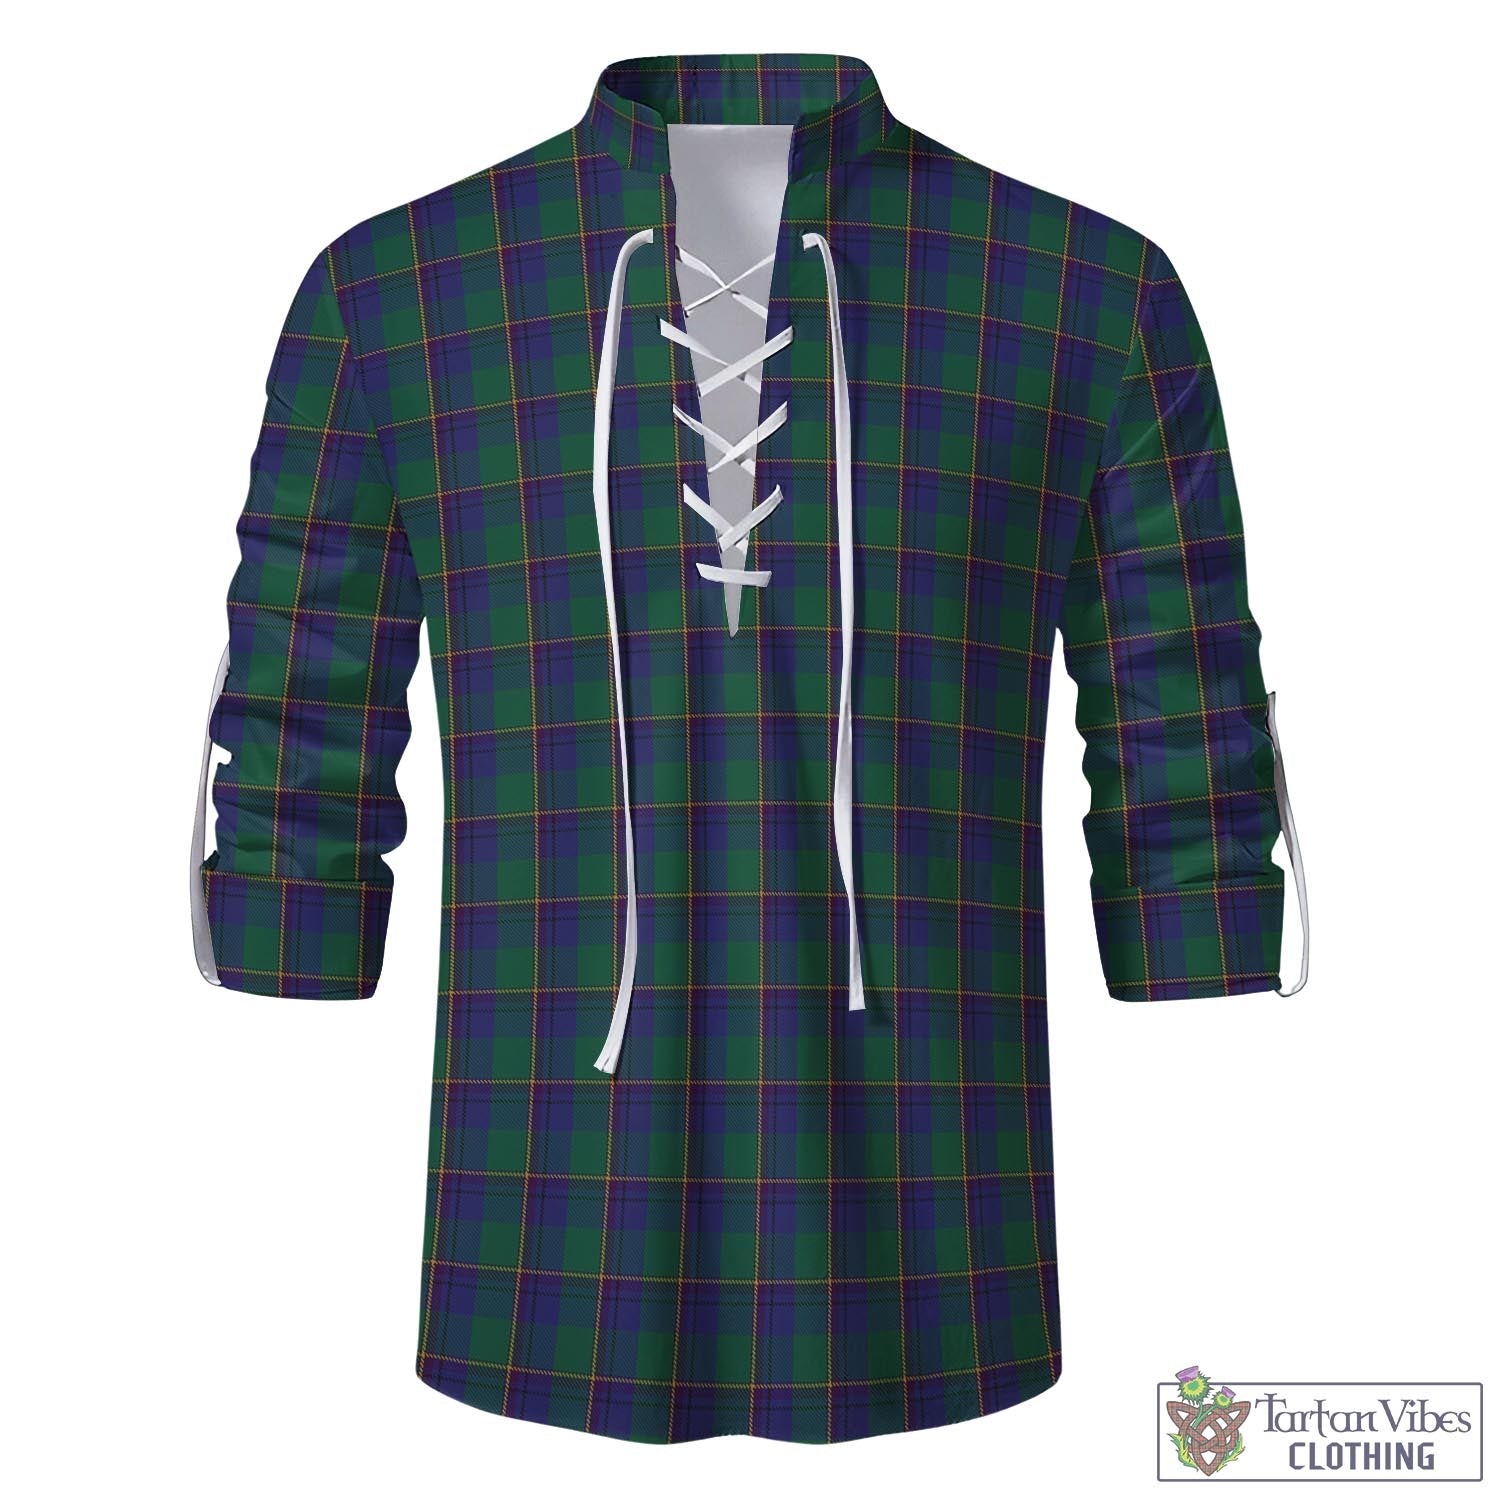 Tartan Vibes Clothing Lowry Tartan Men's Scottish Traditional Jacobite Ghillie Kilt Shirt